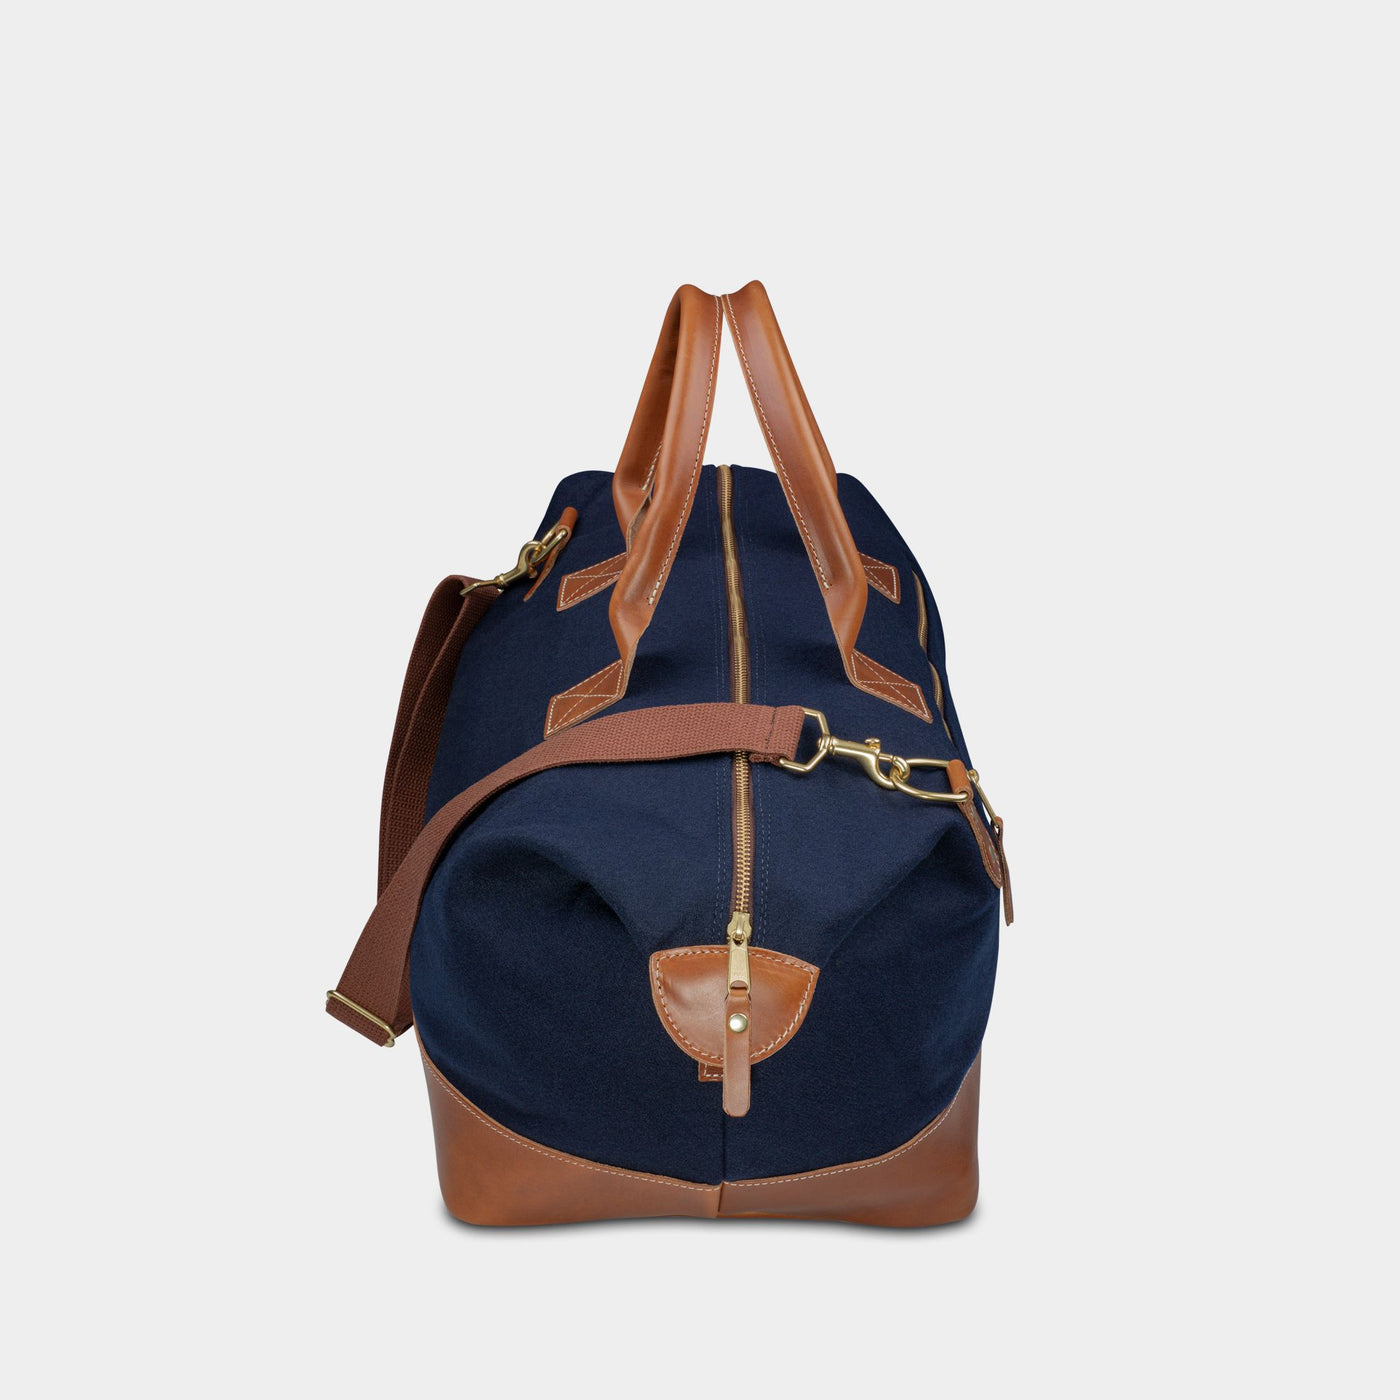 Columbia University "Crest" Weekender Duffle Bag